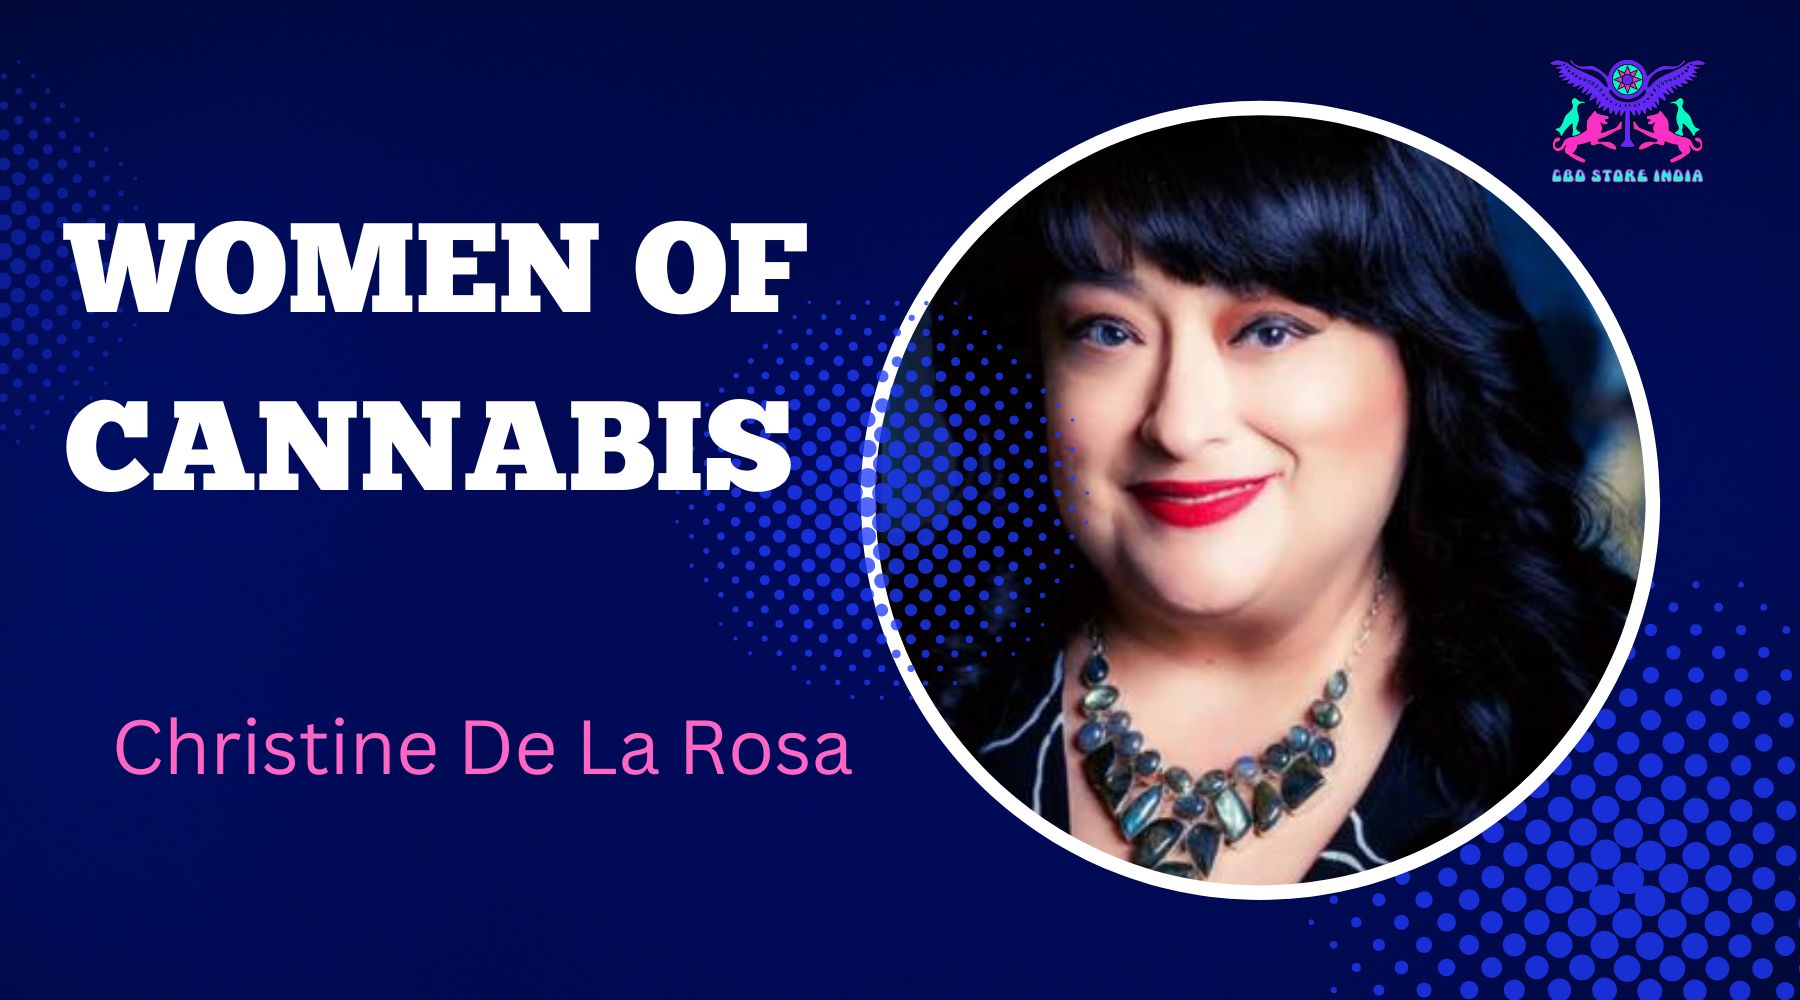 Women of Cannabis: Christine De La Rosa aims to make Cannabis accessible to all - CBD Store India